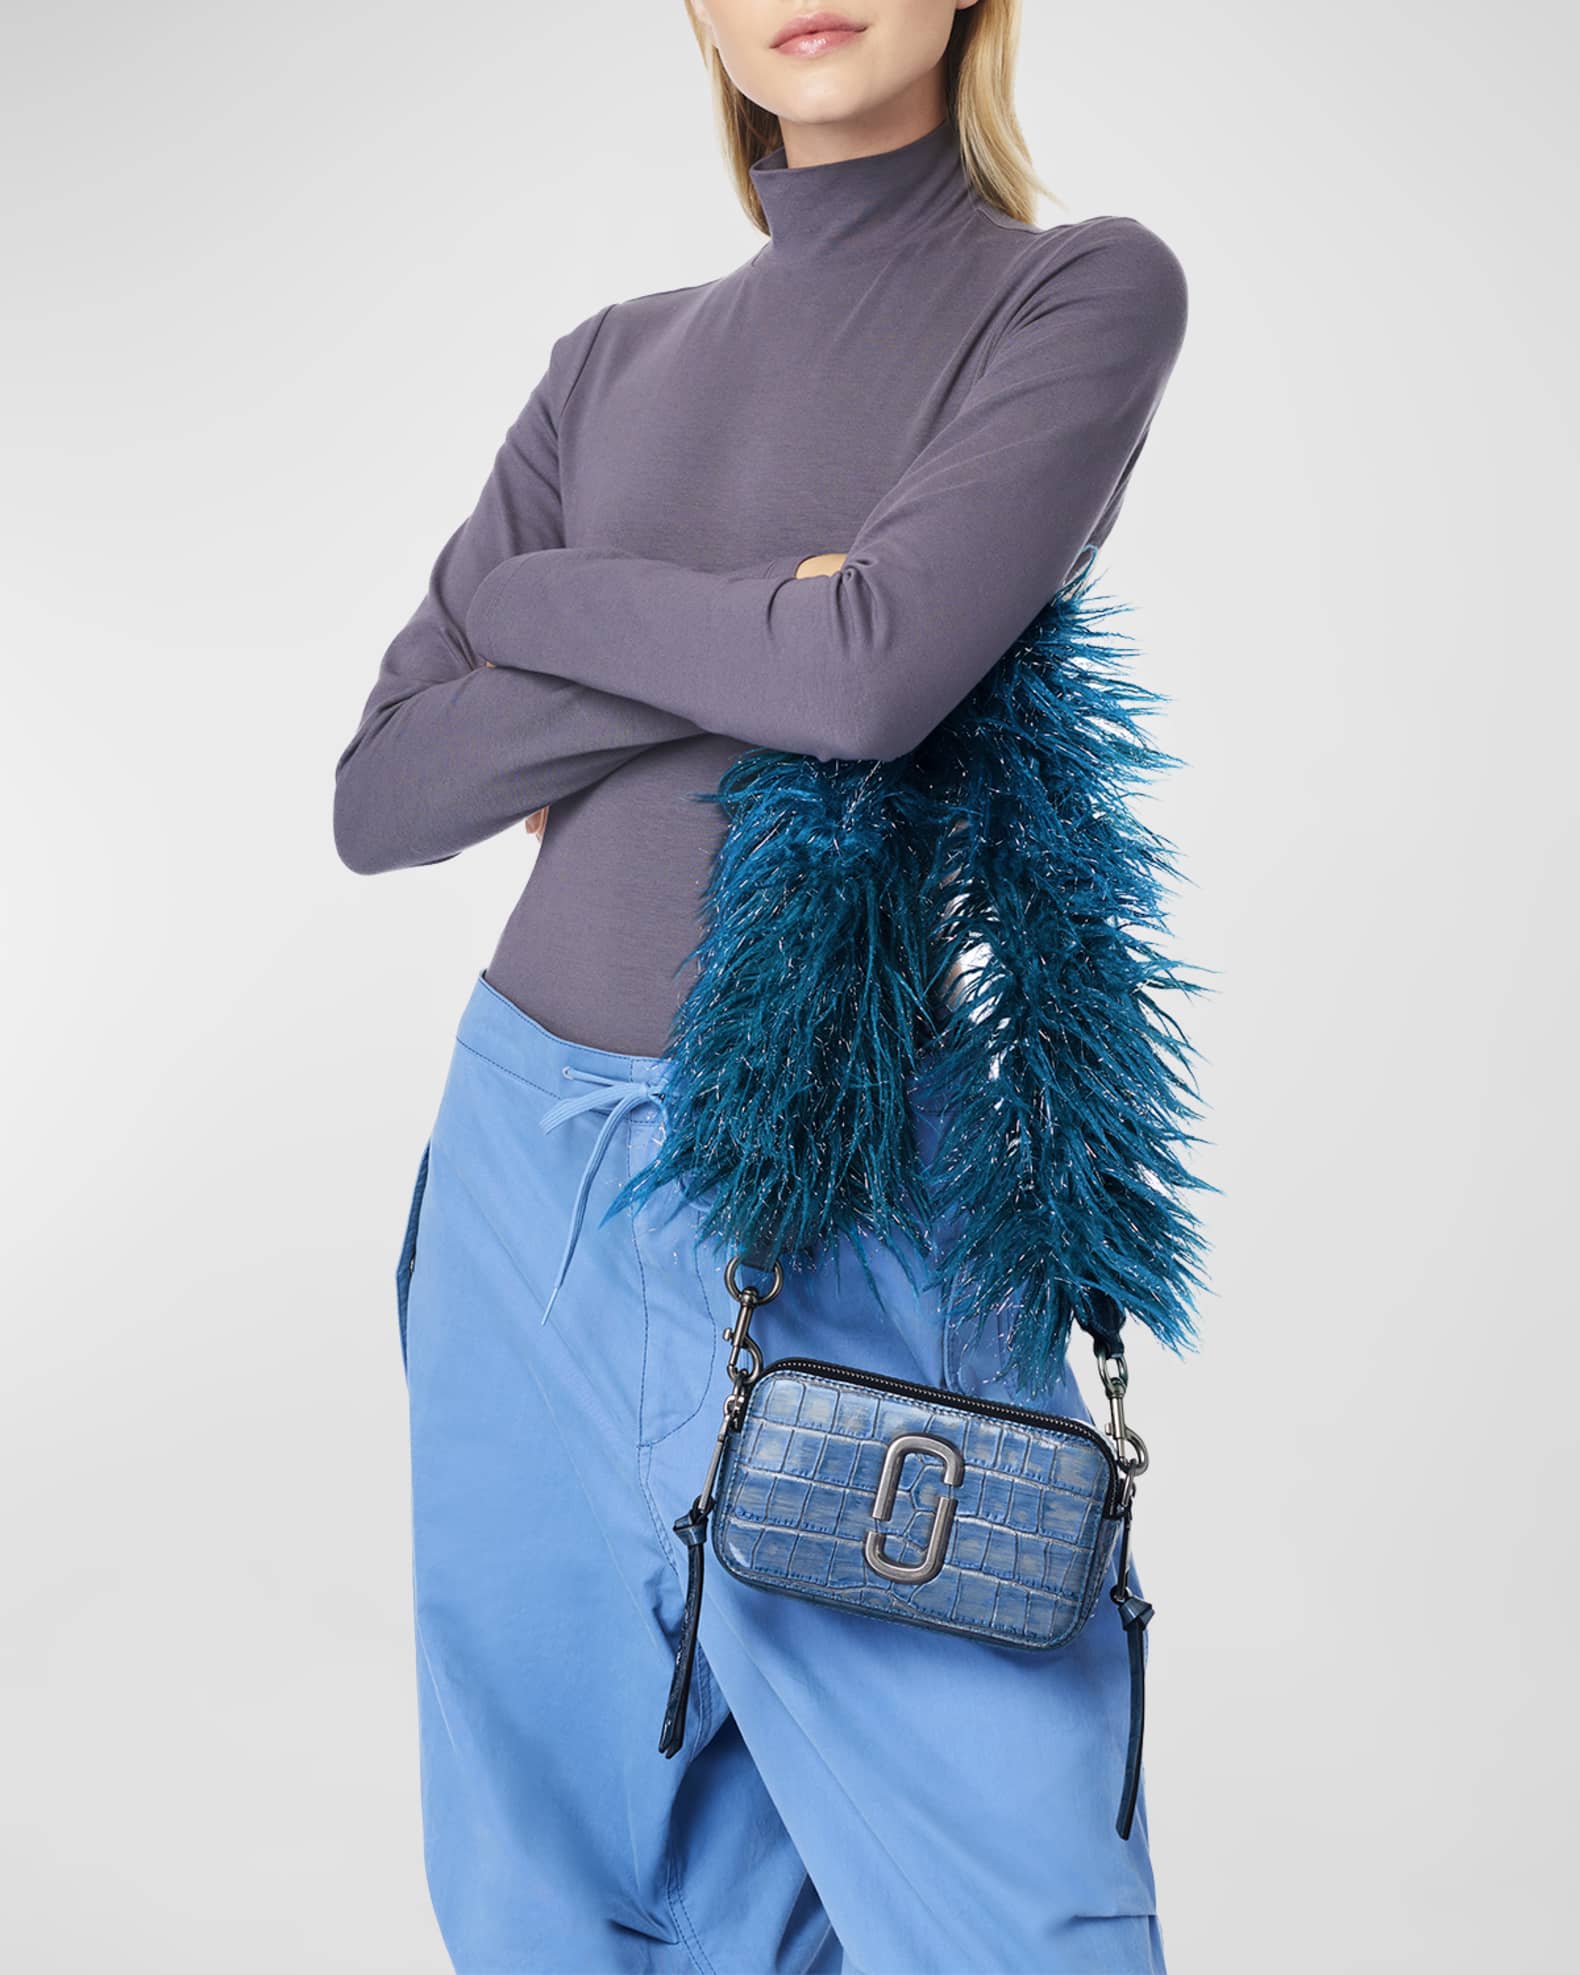 Marc Jacobs Black 'The Croc-Embossed Snapshot' Bag